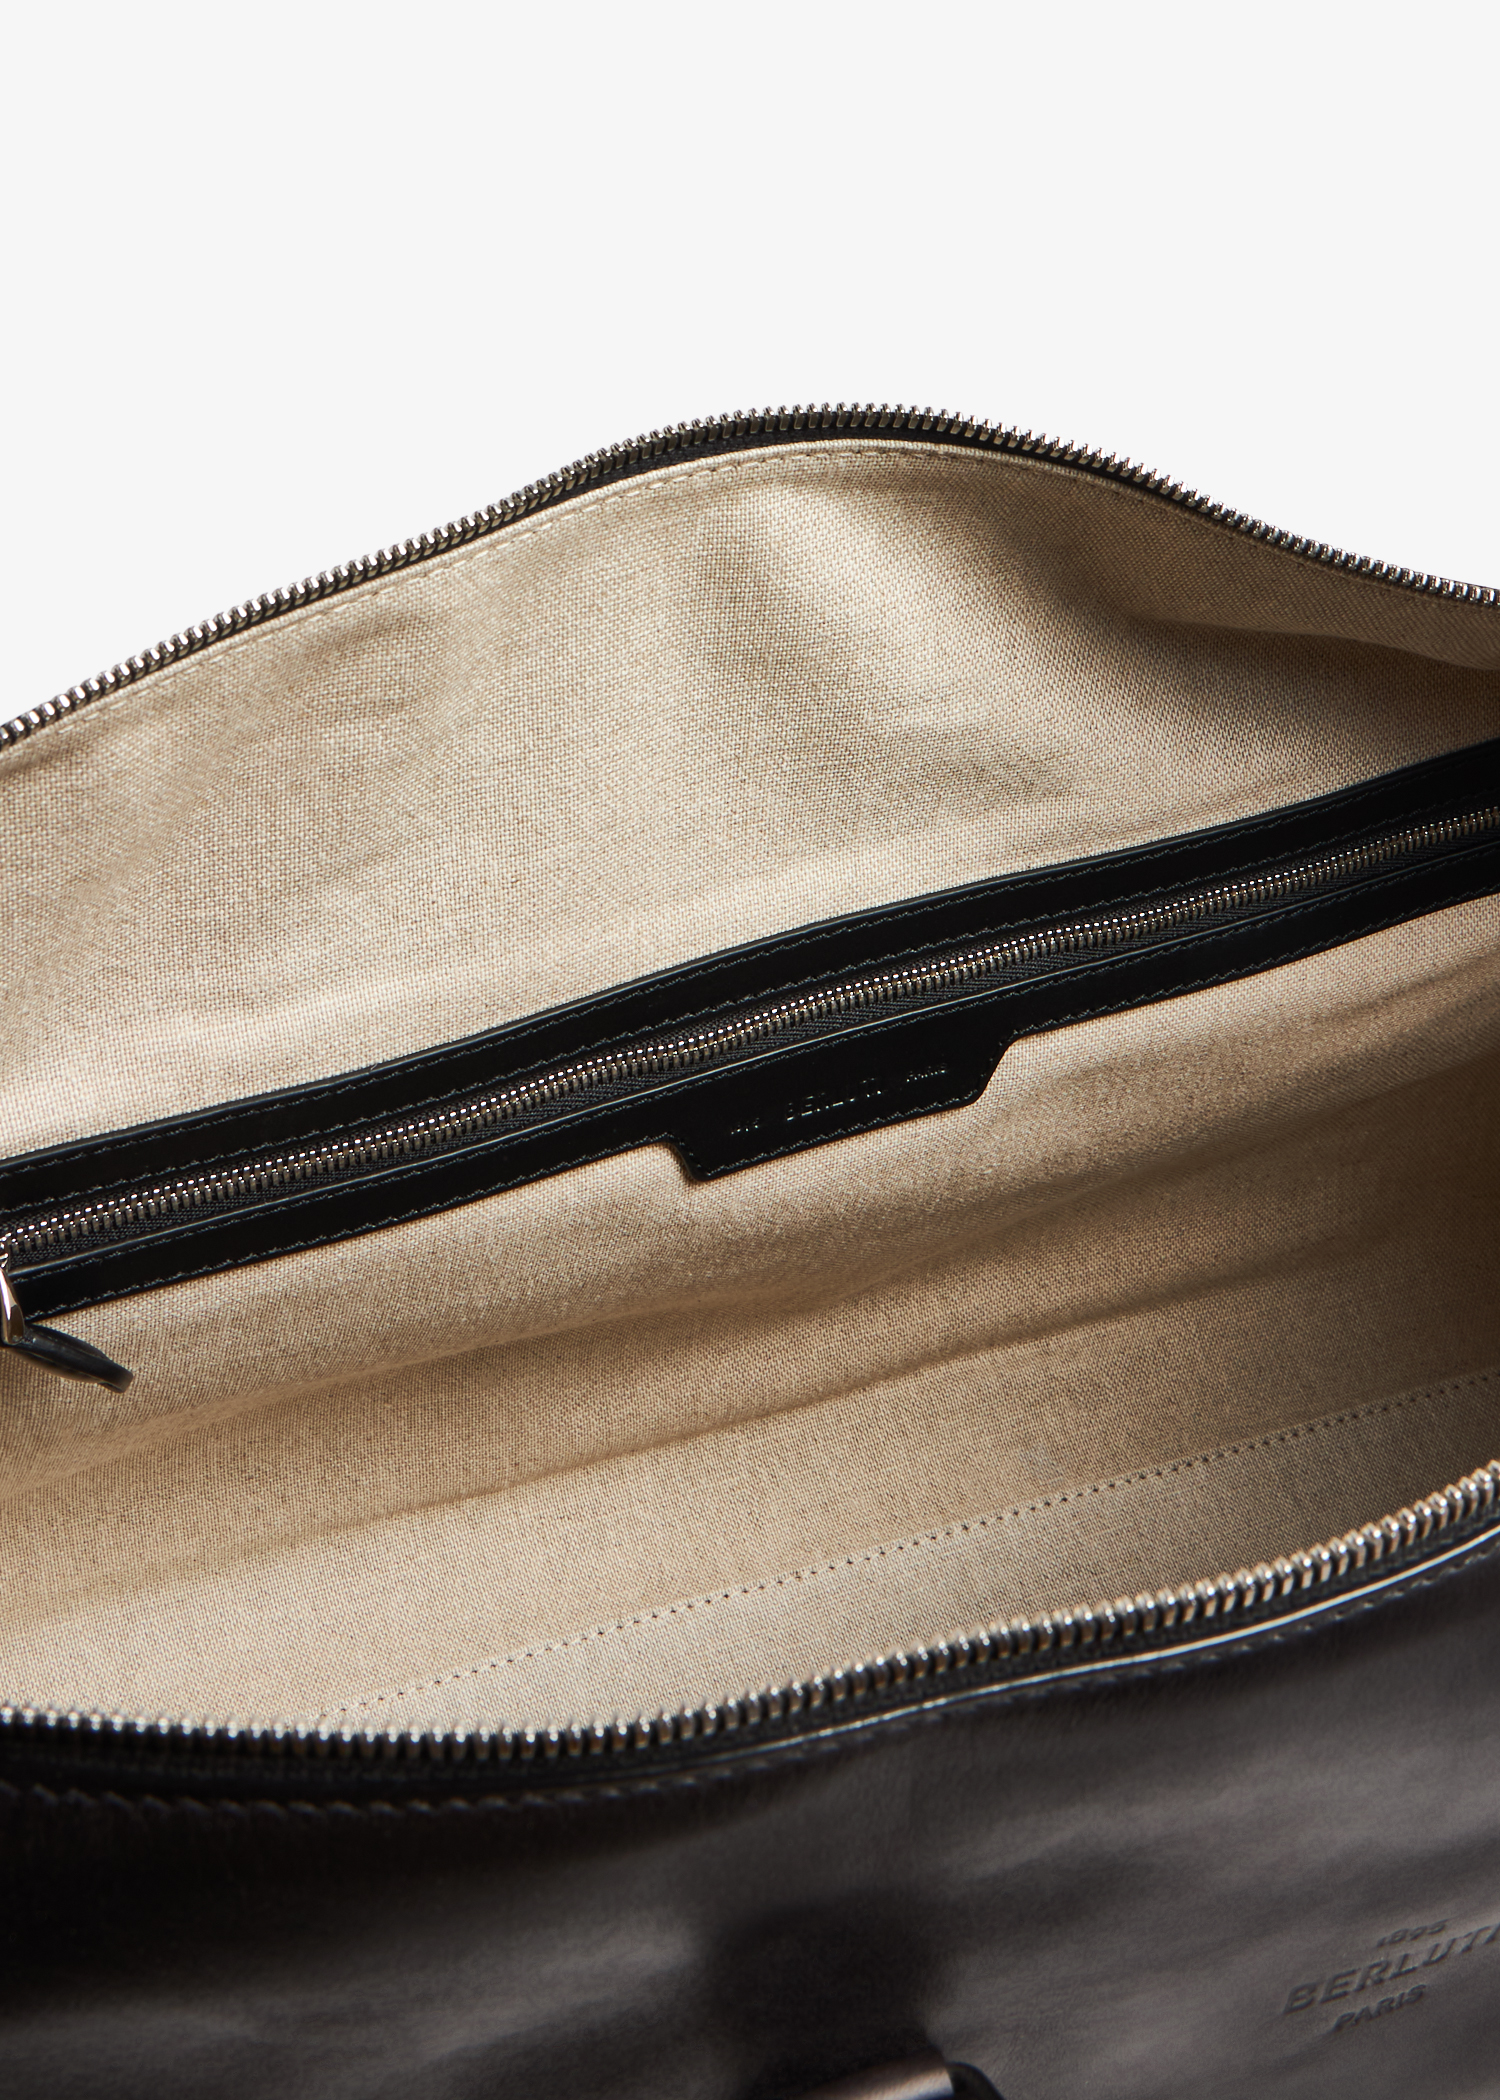 Berluti Jour Off MM leather travel bag for Men - Black in UAE